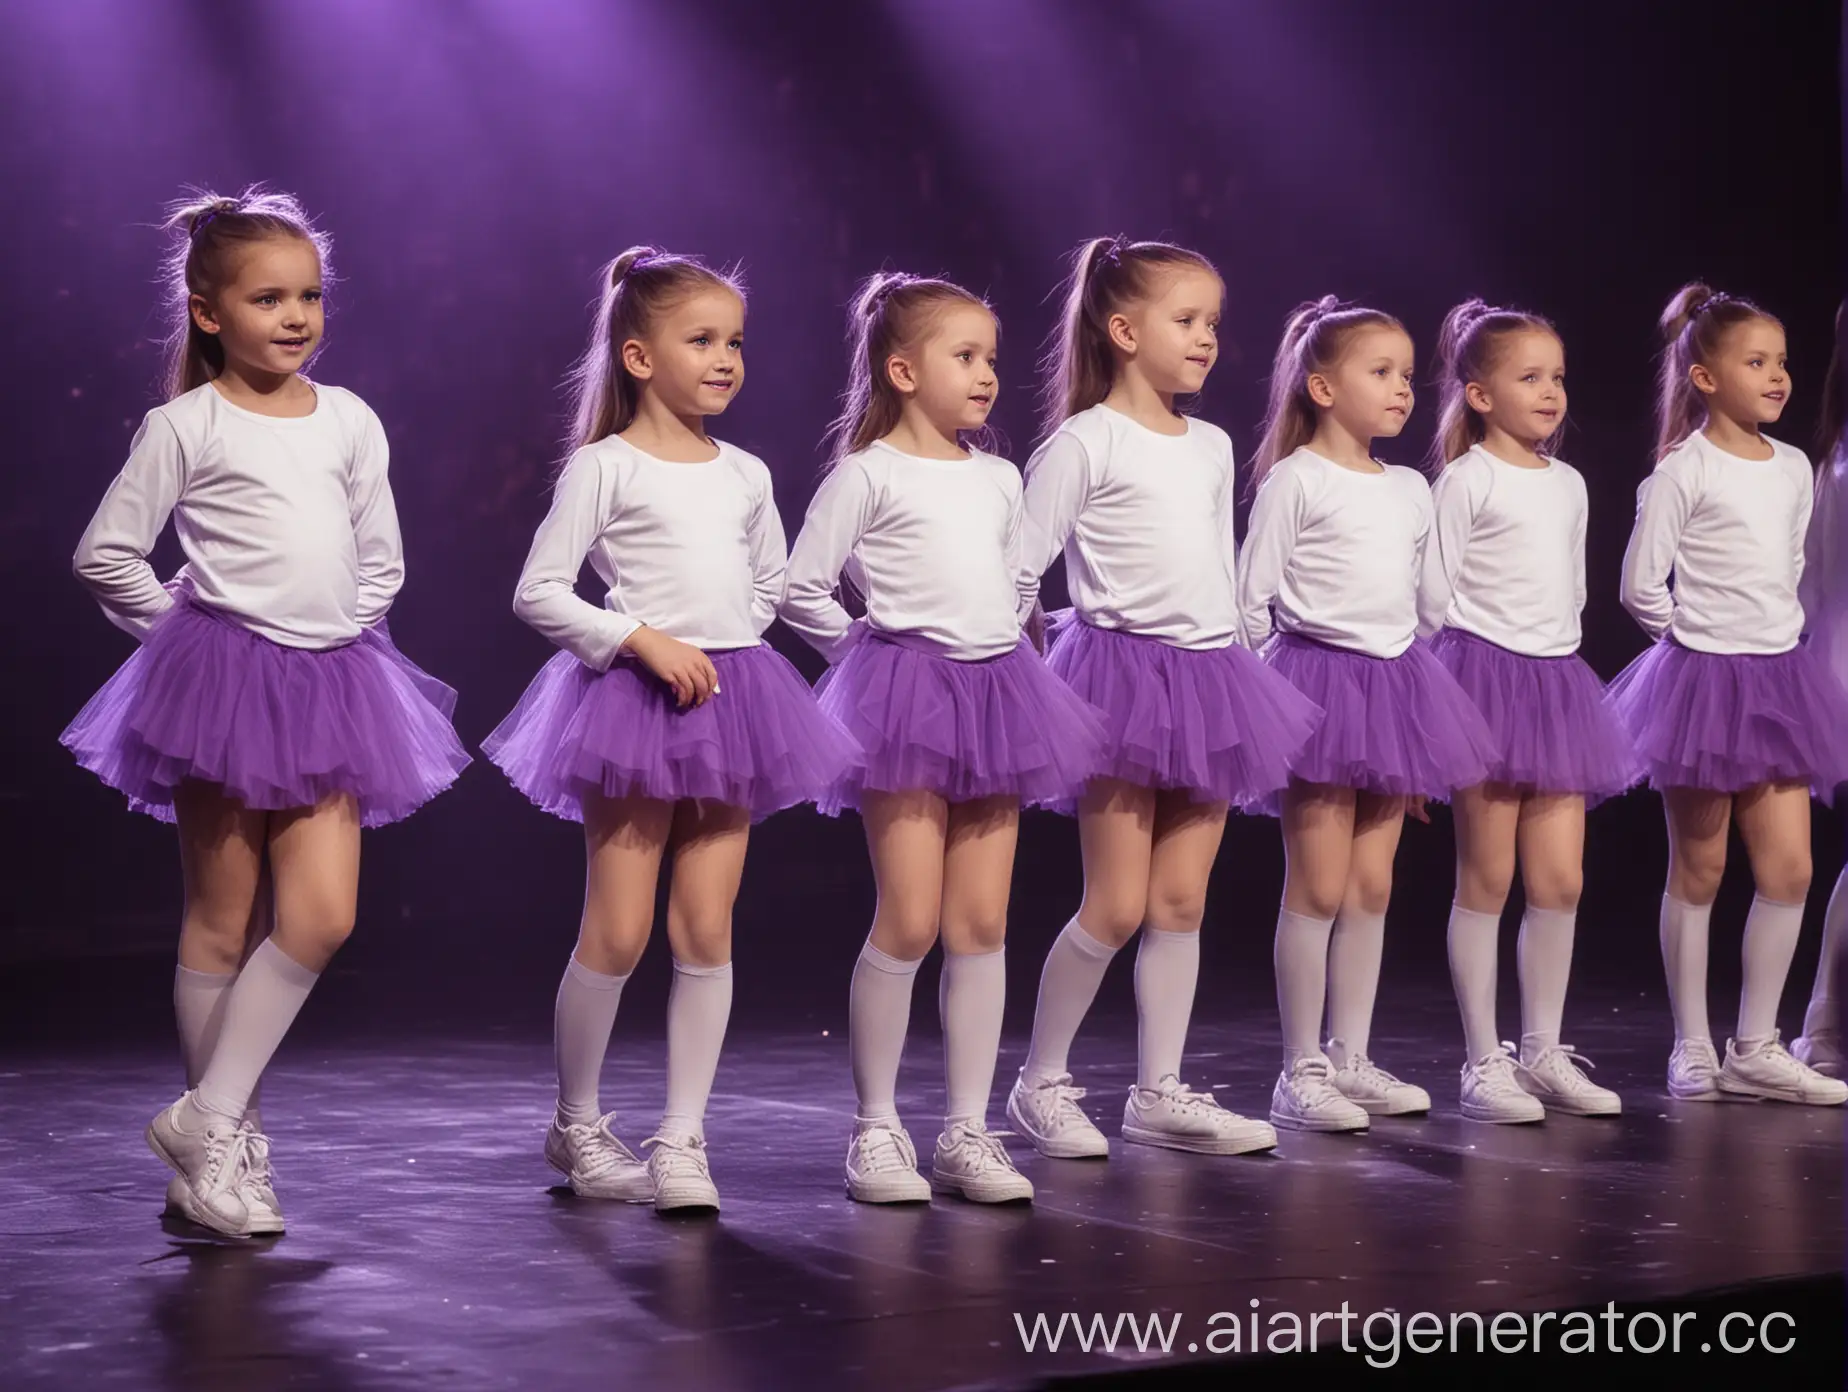 Energetic-SixYearOld-Girls-Dancing-in-Purple-Tulle-Skirts-on-Stage